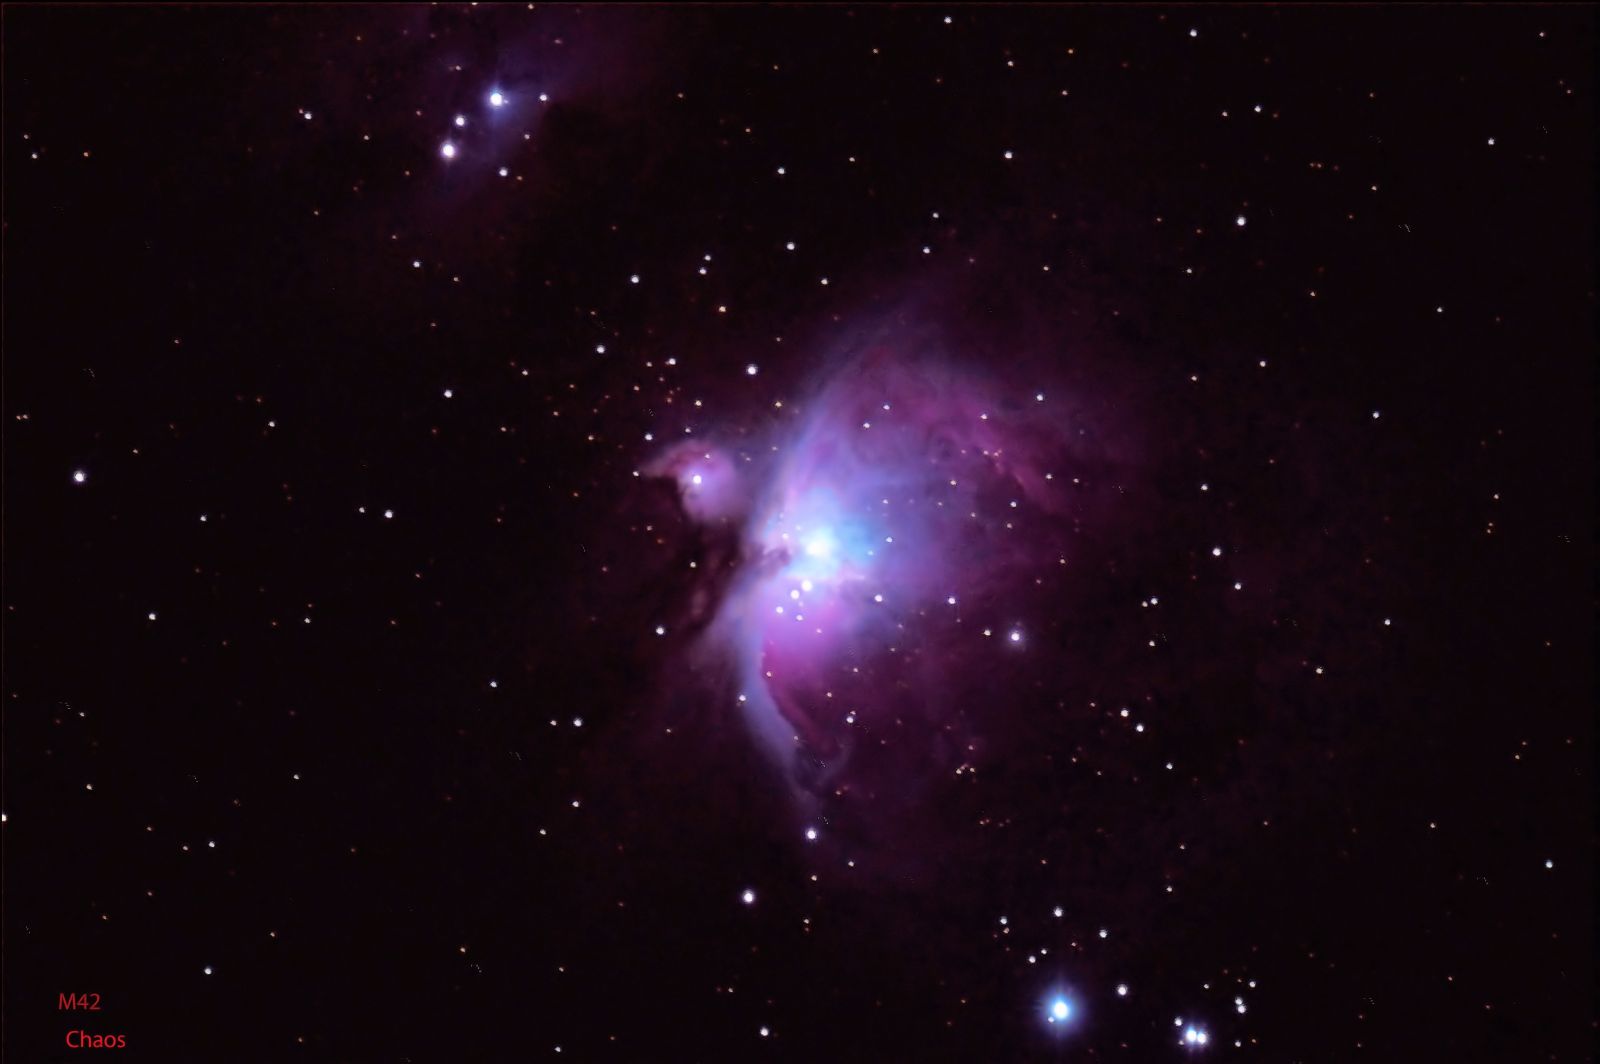 M42 orion Neb Oct 15